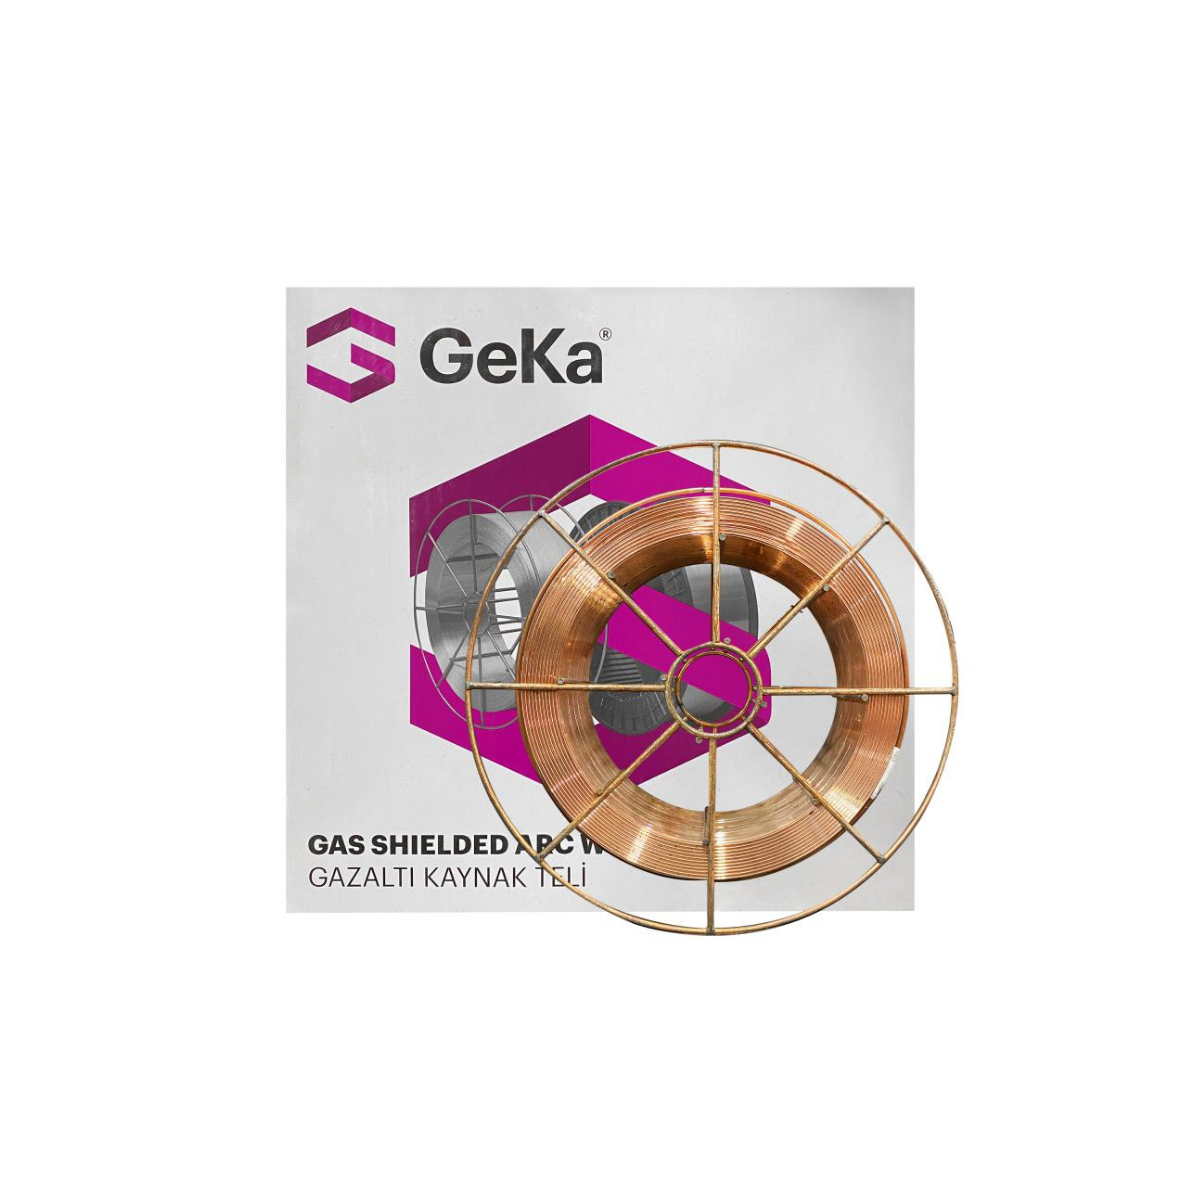 GeKa SG 3 Bazik Mig Gazaltı Kaynak Teli 0,8 MM - 15 KG